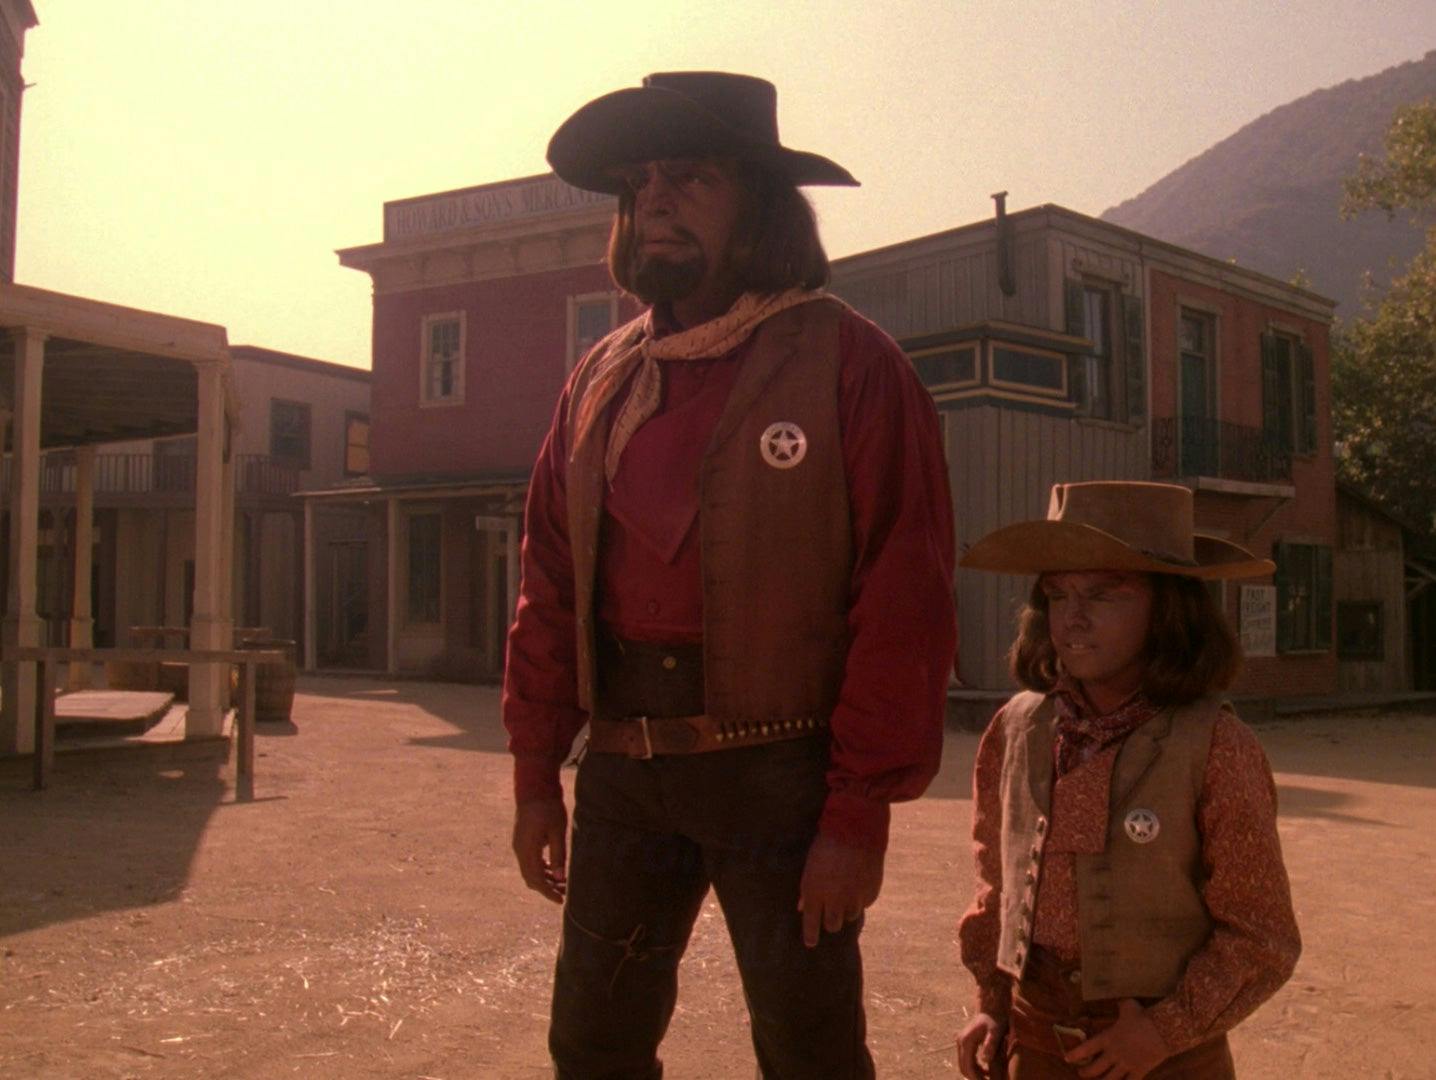 Sheriff Worf